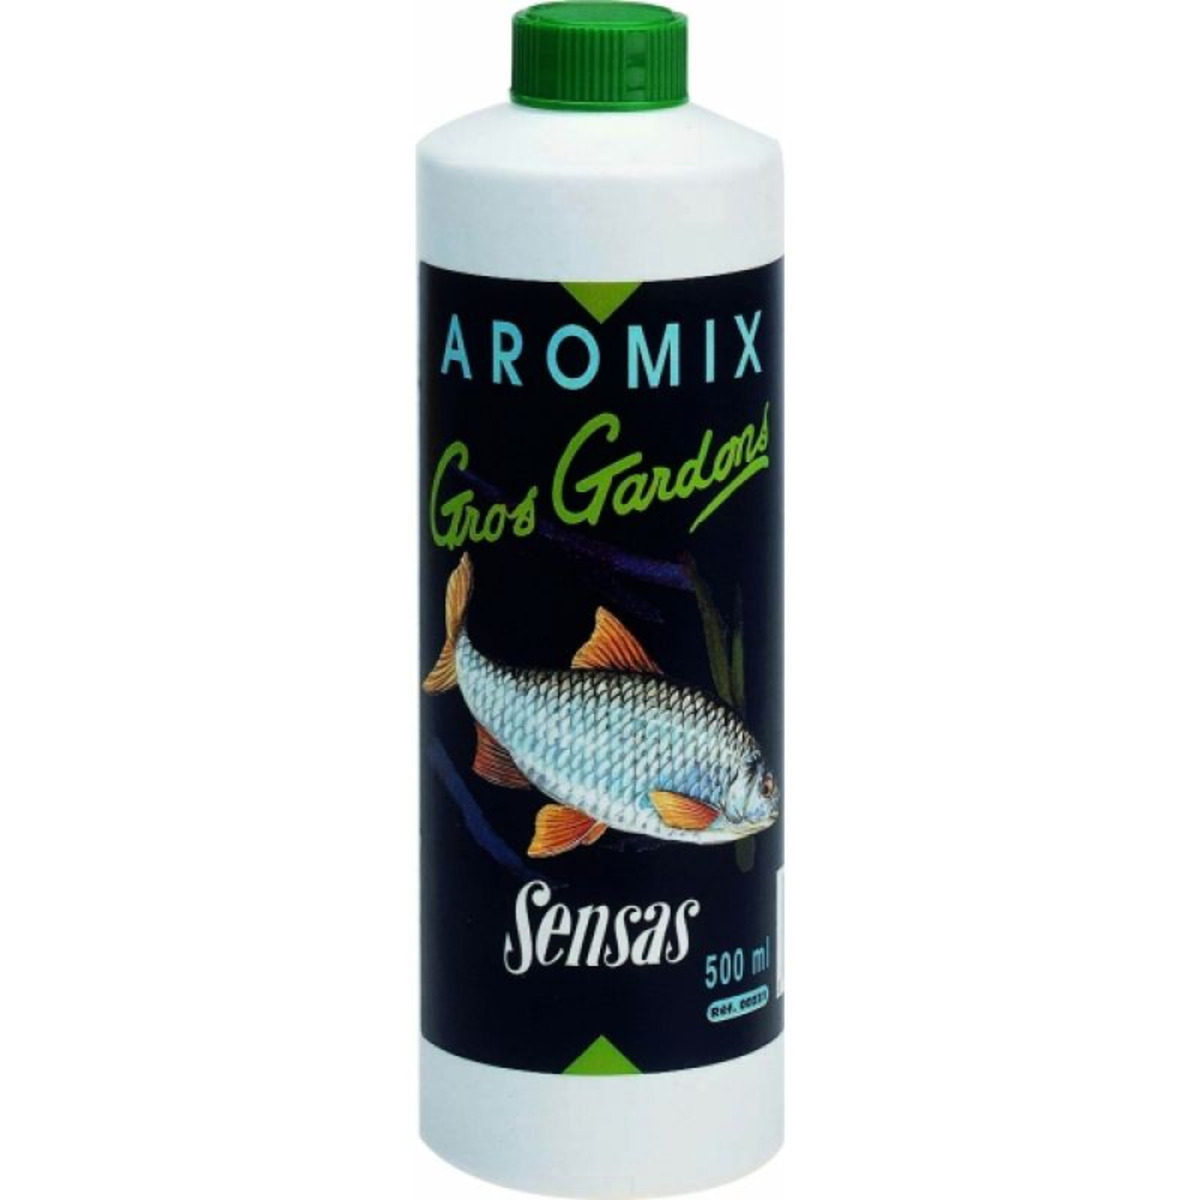 Sensas Aromix Gros Gardons - 500 ml